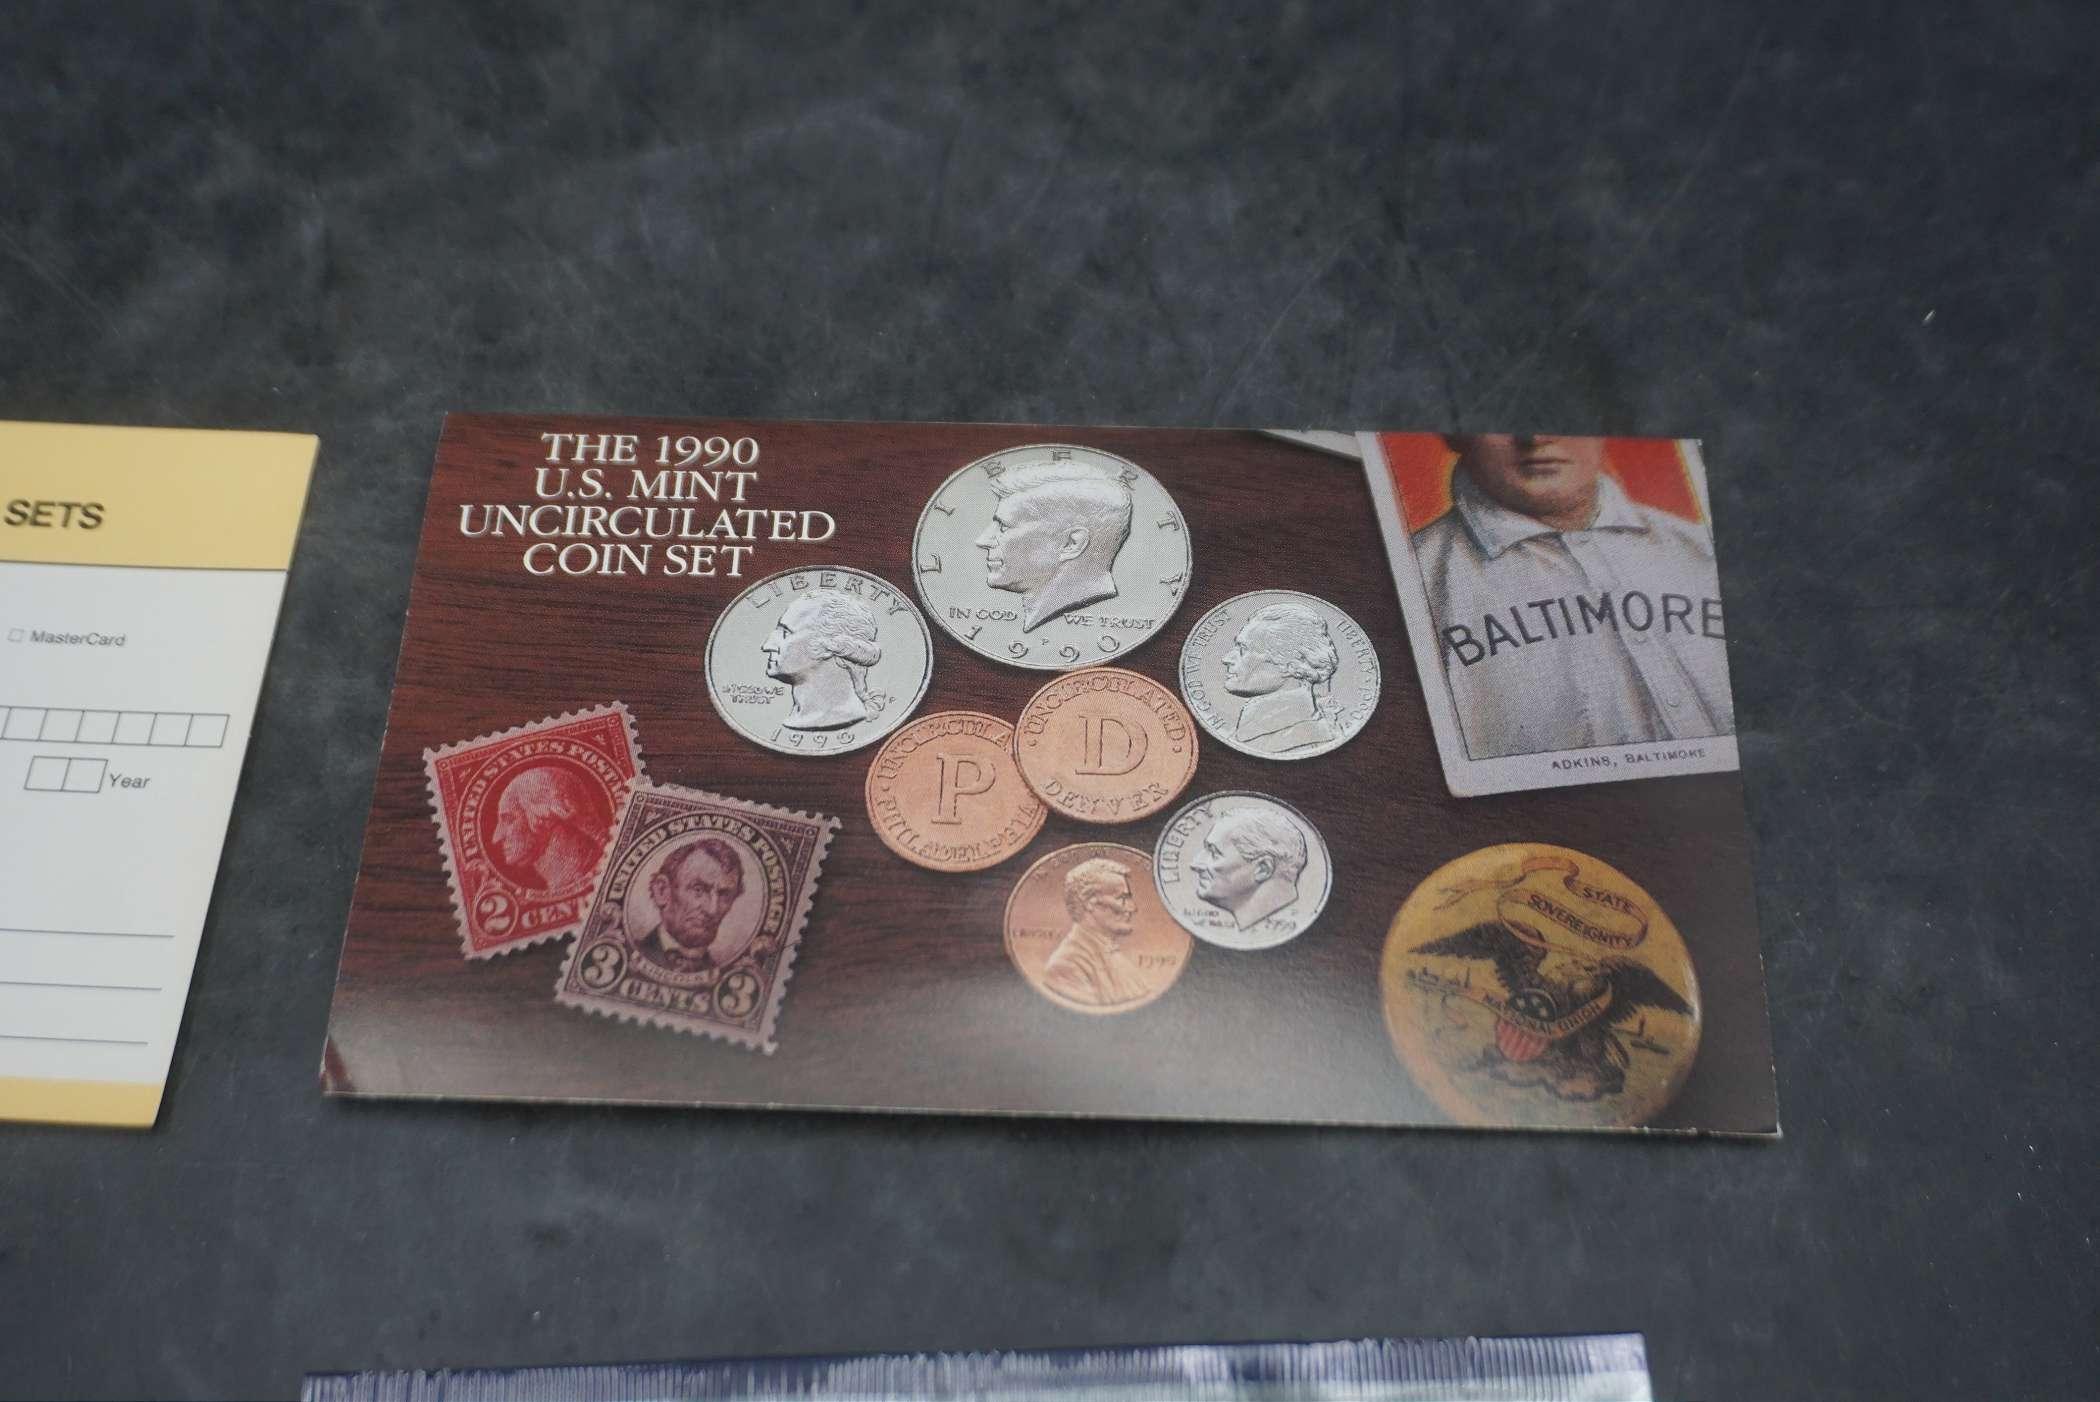 1990 U.S. Mint Uncirculated Coin Set